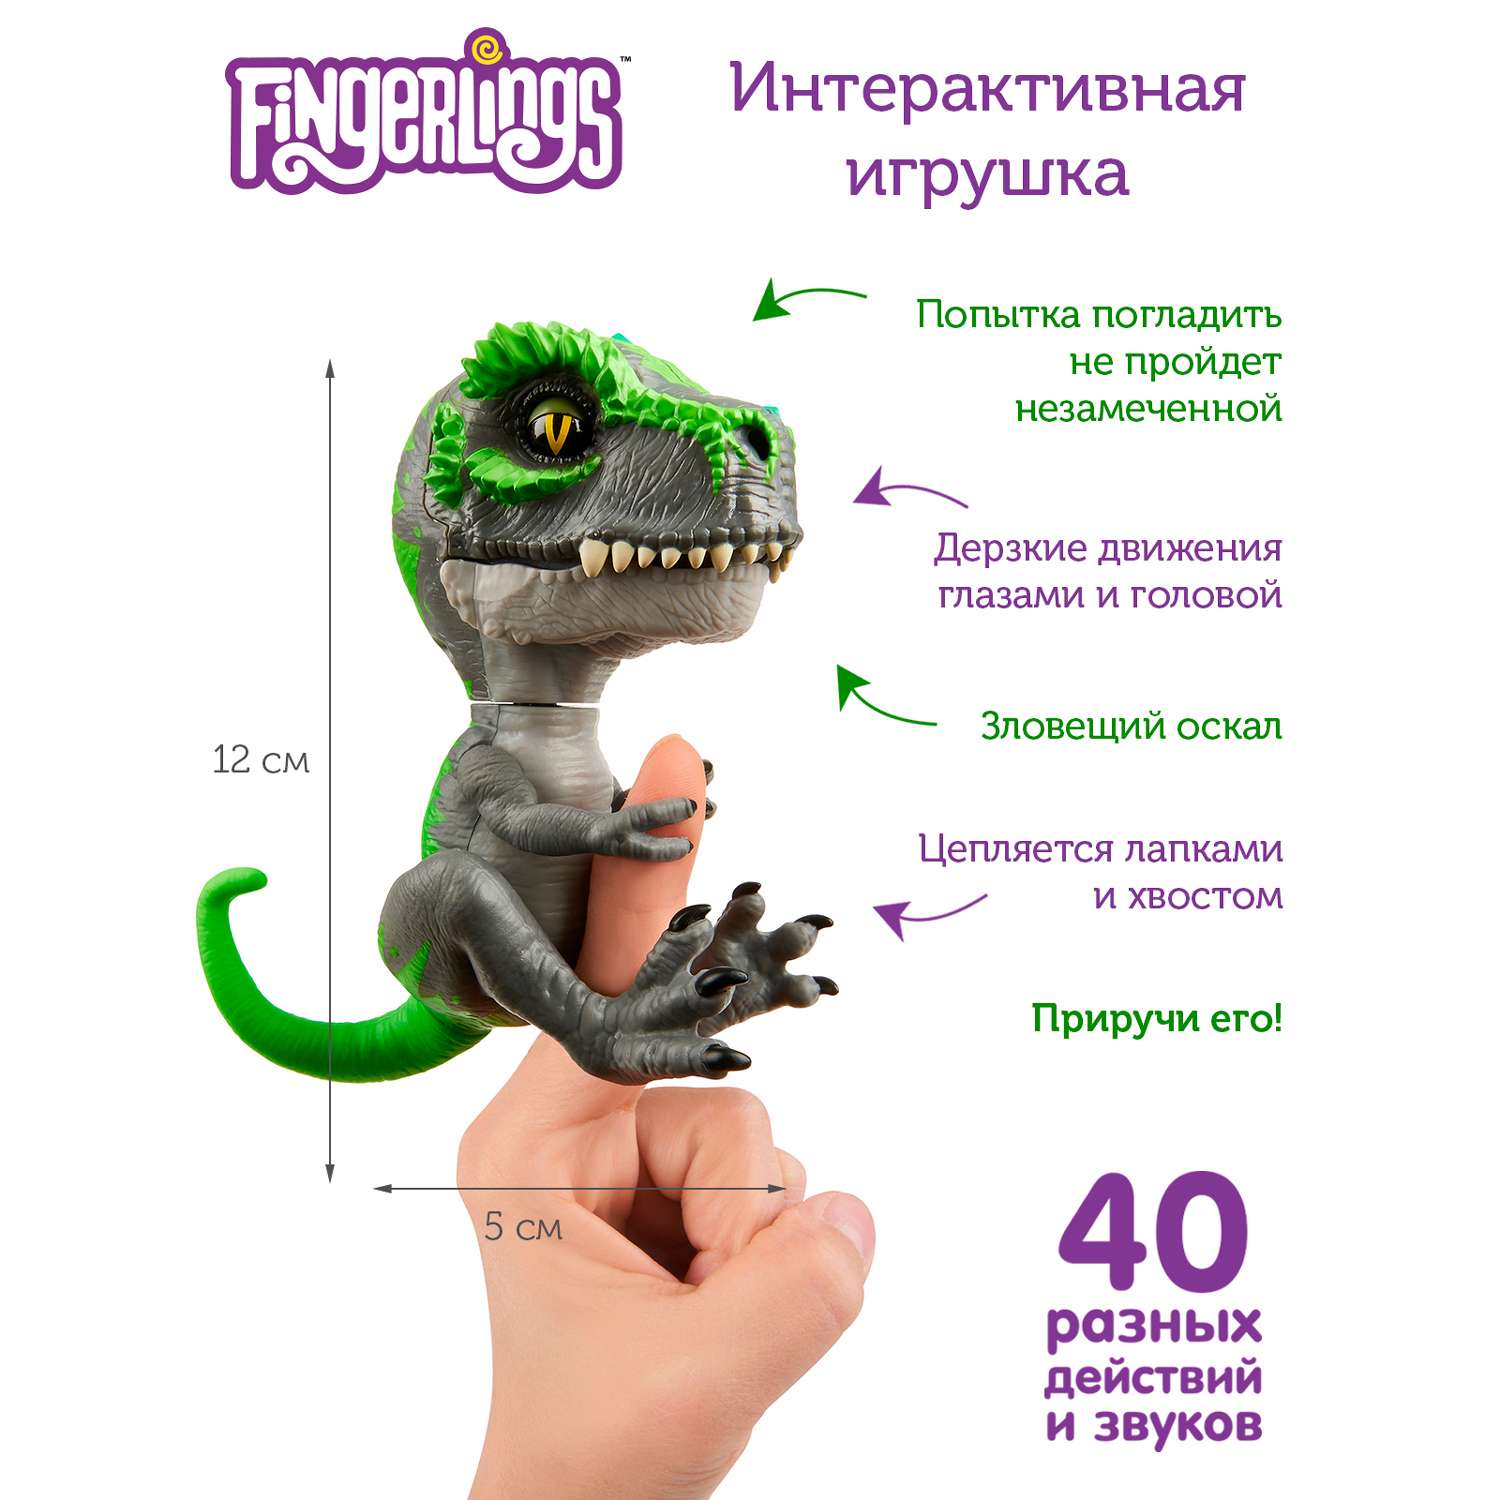 Интерактивная игрушка Fingerlings Динозавр Треккер 3788 - фото 2